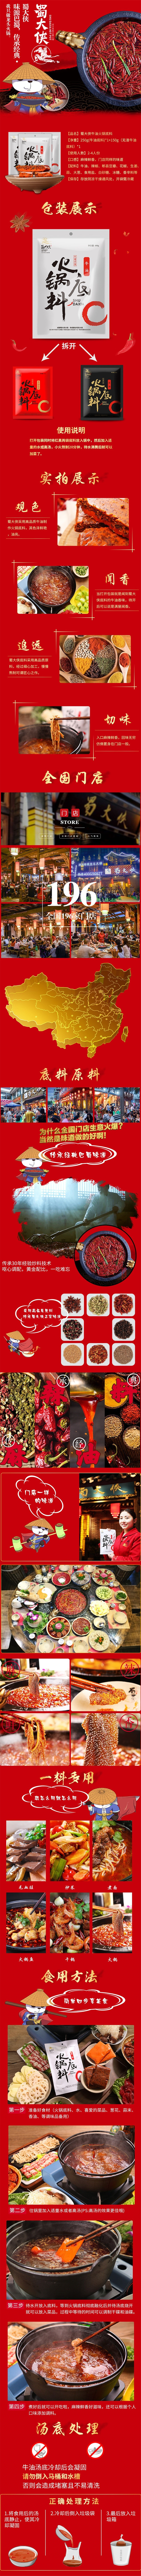 Chongqing hotpot seasoning 400g